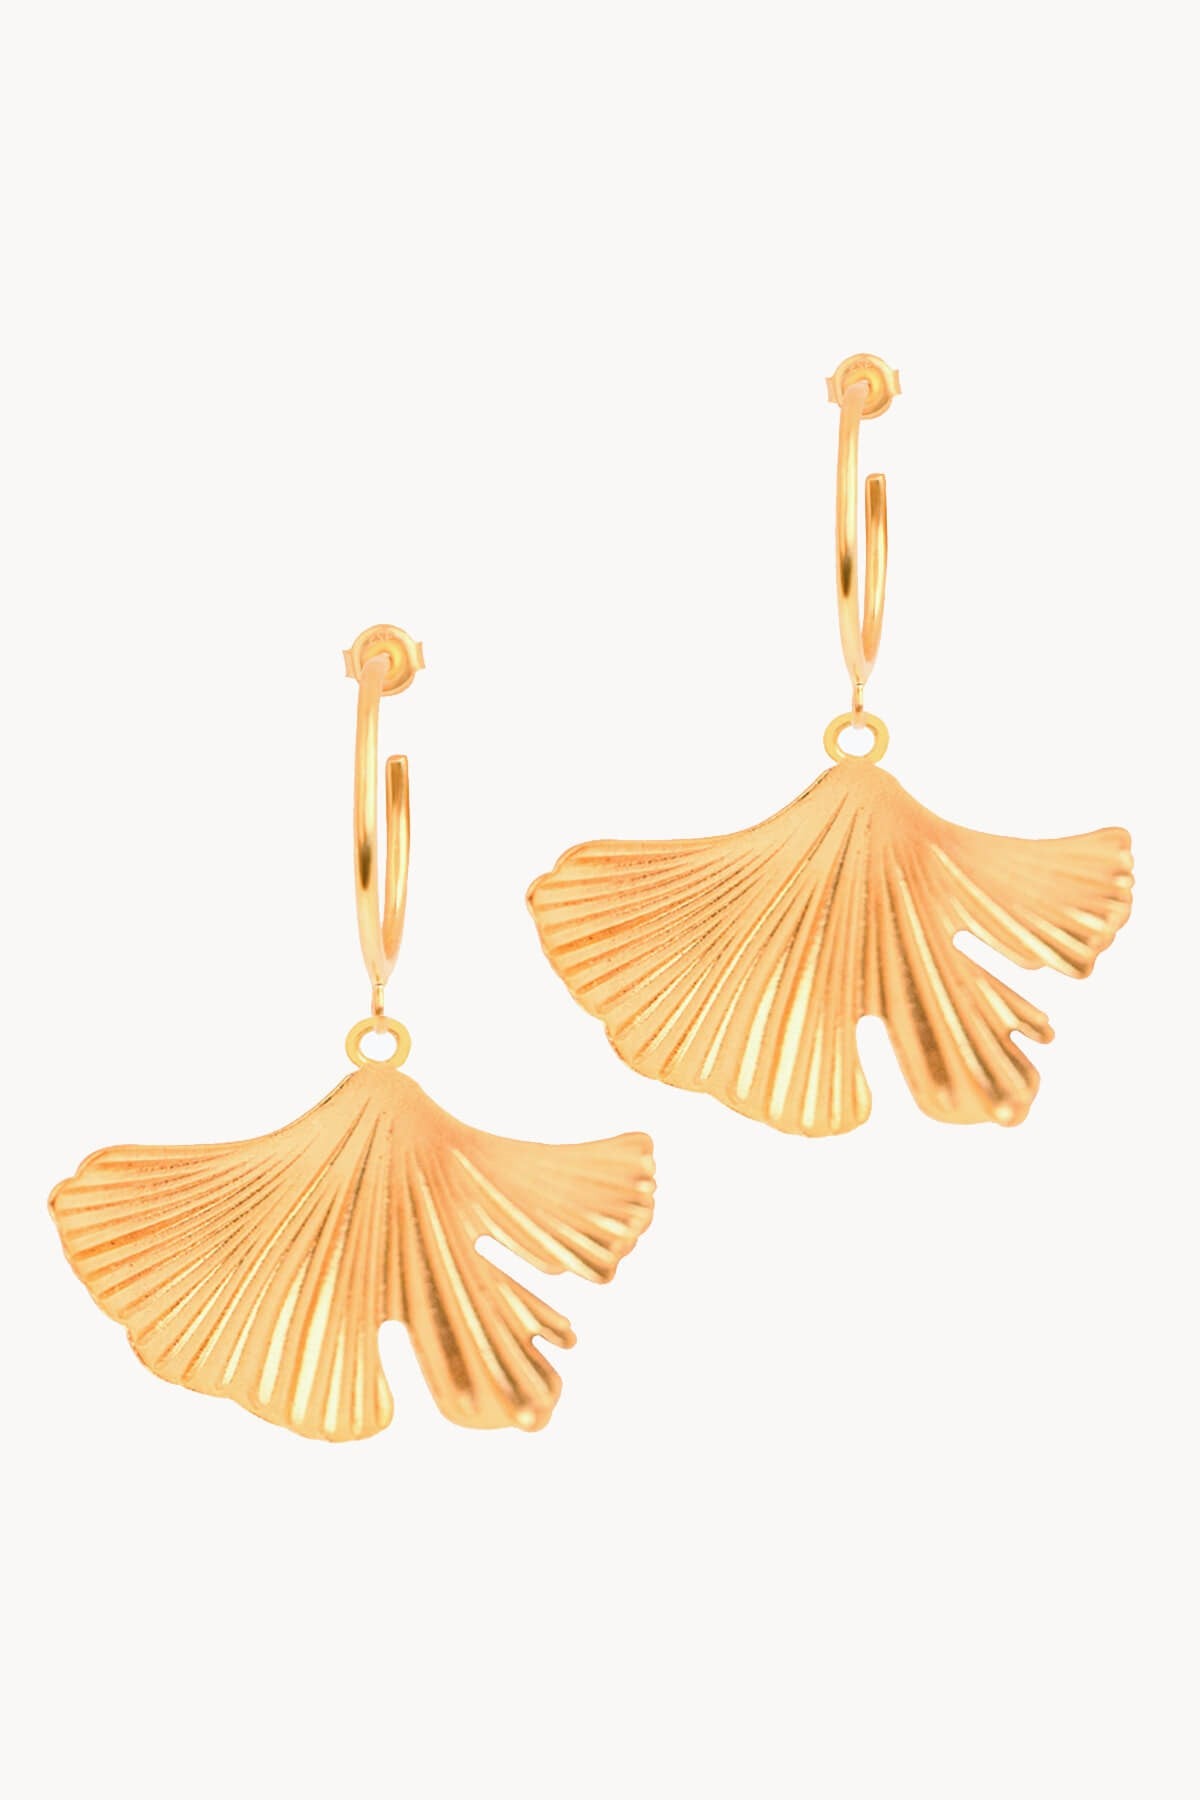 Ginkgo Biloba Leaf Hoop Earrings Gold Plated Large